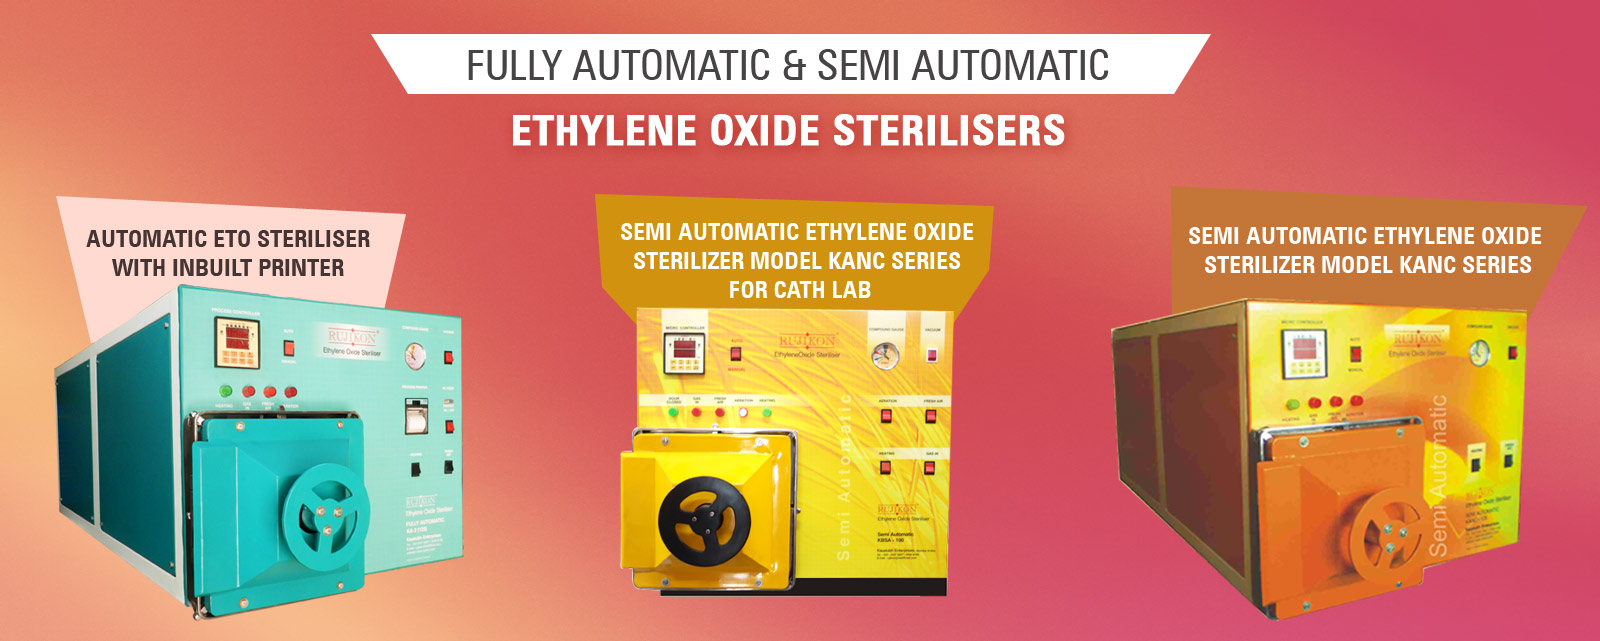 Automatic & Semi Automatic Ethylene Oxide Steriliser in Mumbai,India